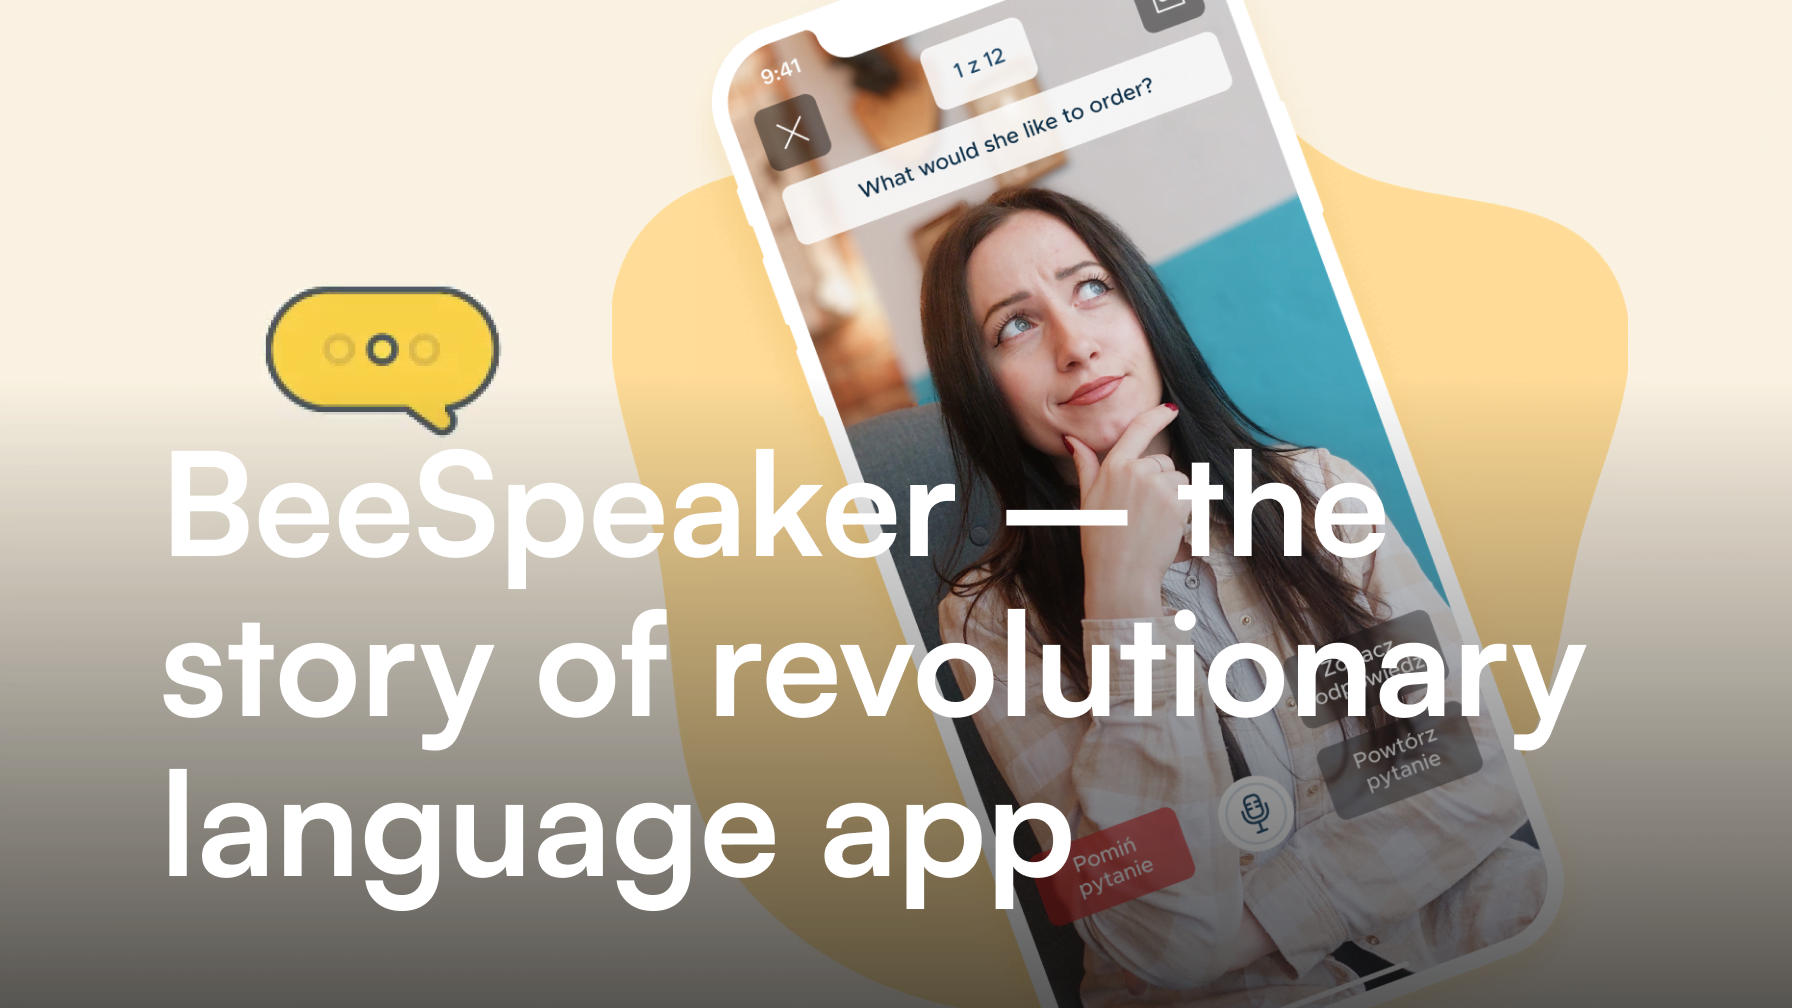 BeeSpeaker - the story of revolutionary language app